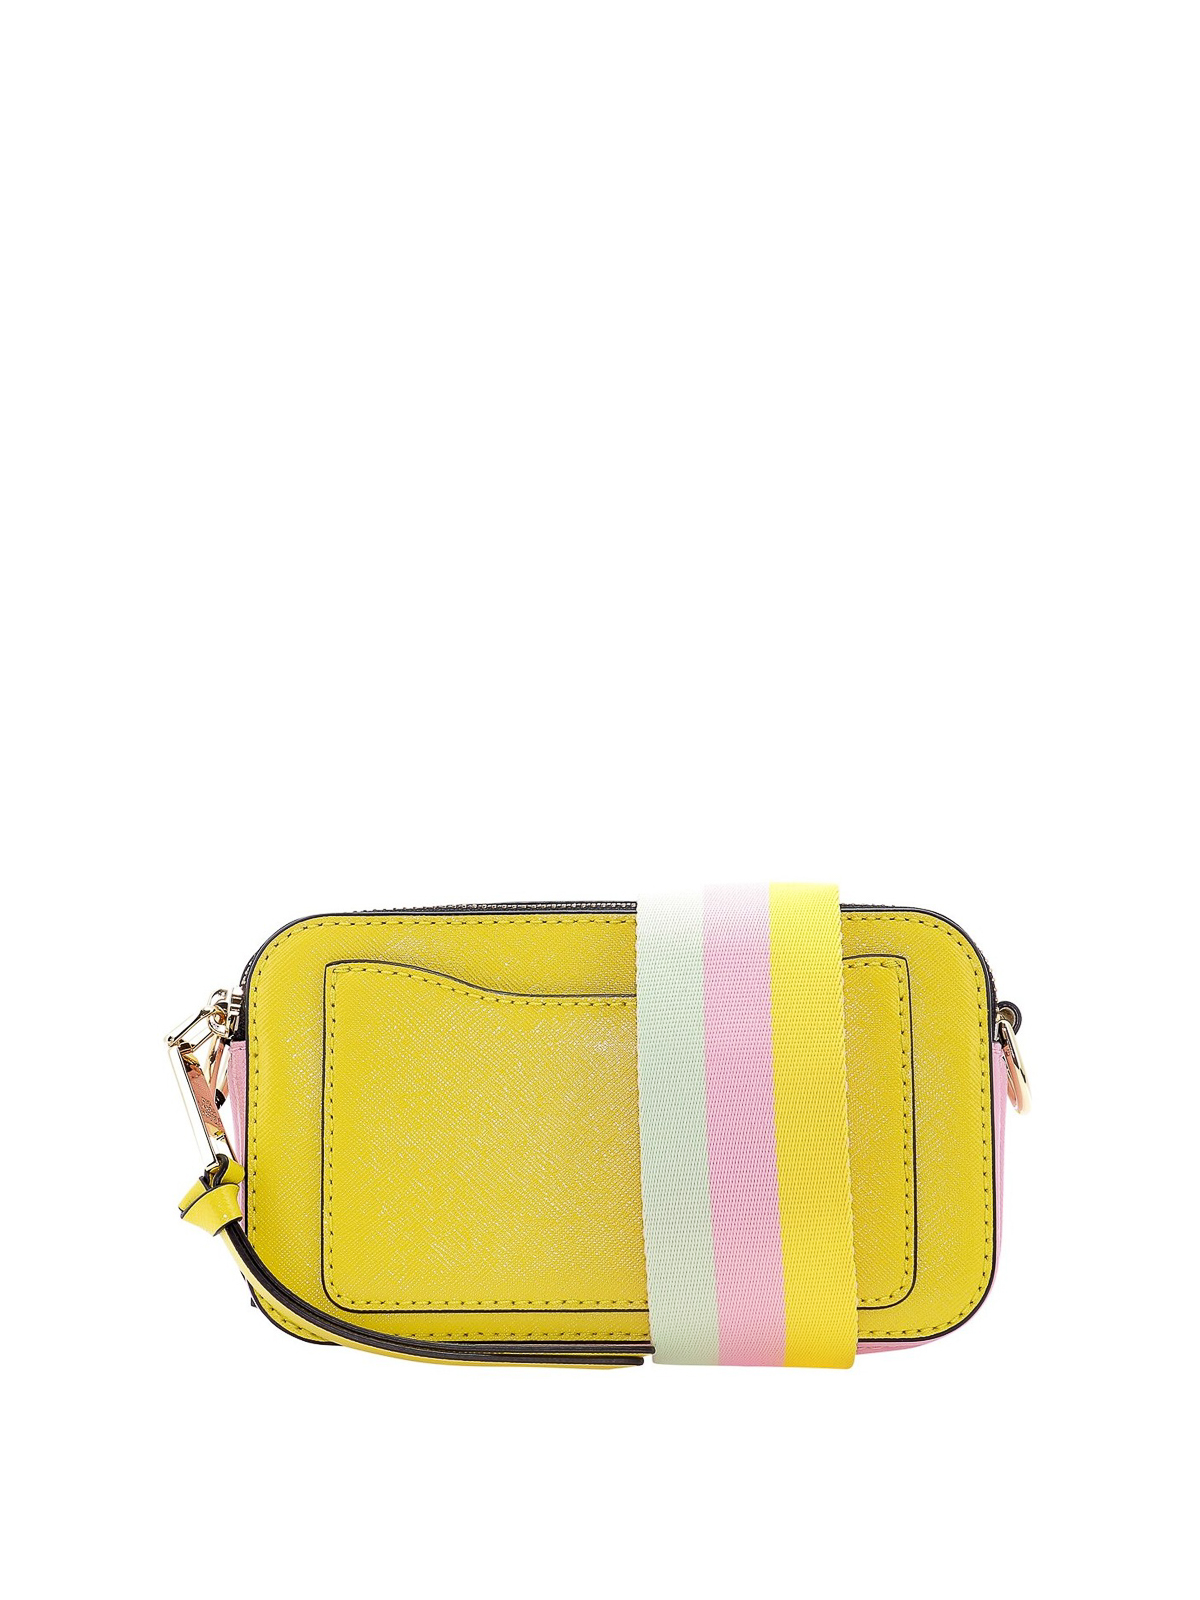 Marc Jacobs Yellow And Pink Small Snapshot Bag